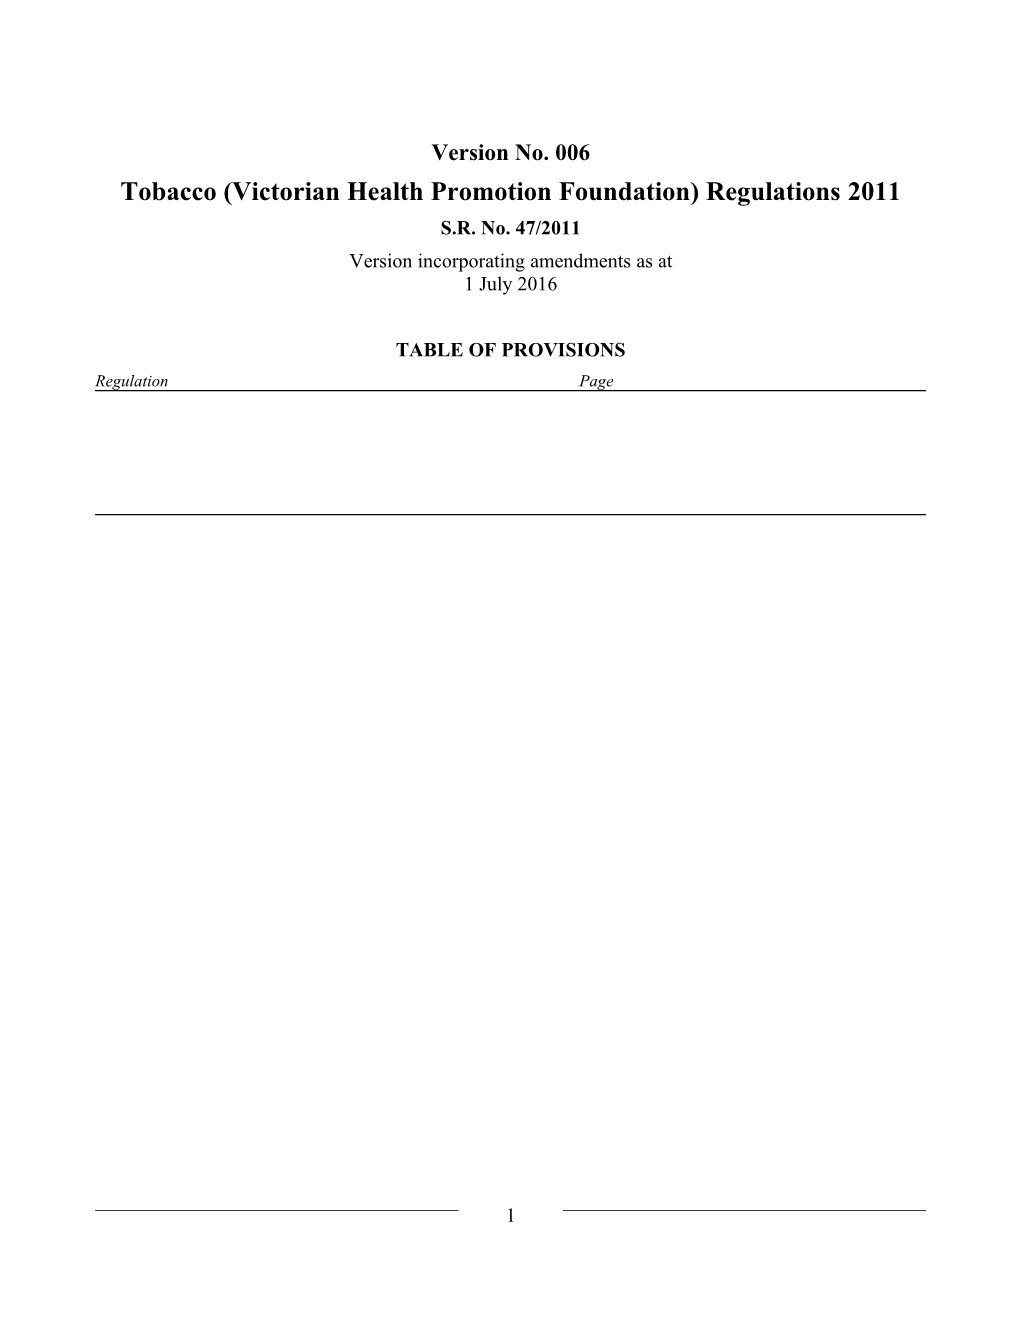 Tobacco (Victorian Health Promotion Foundation) Regulations 2011